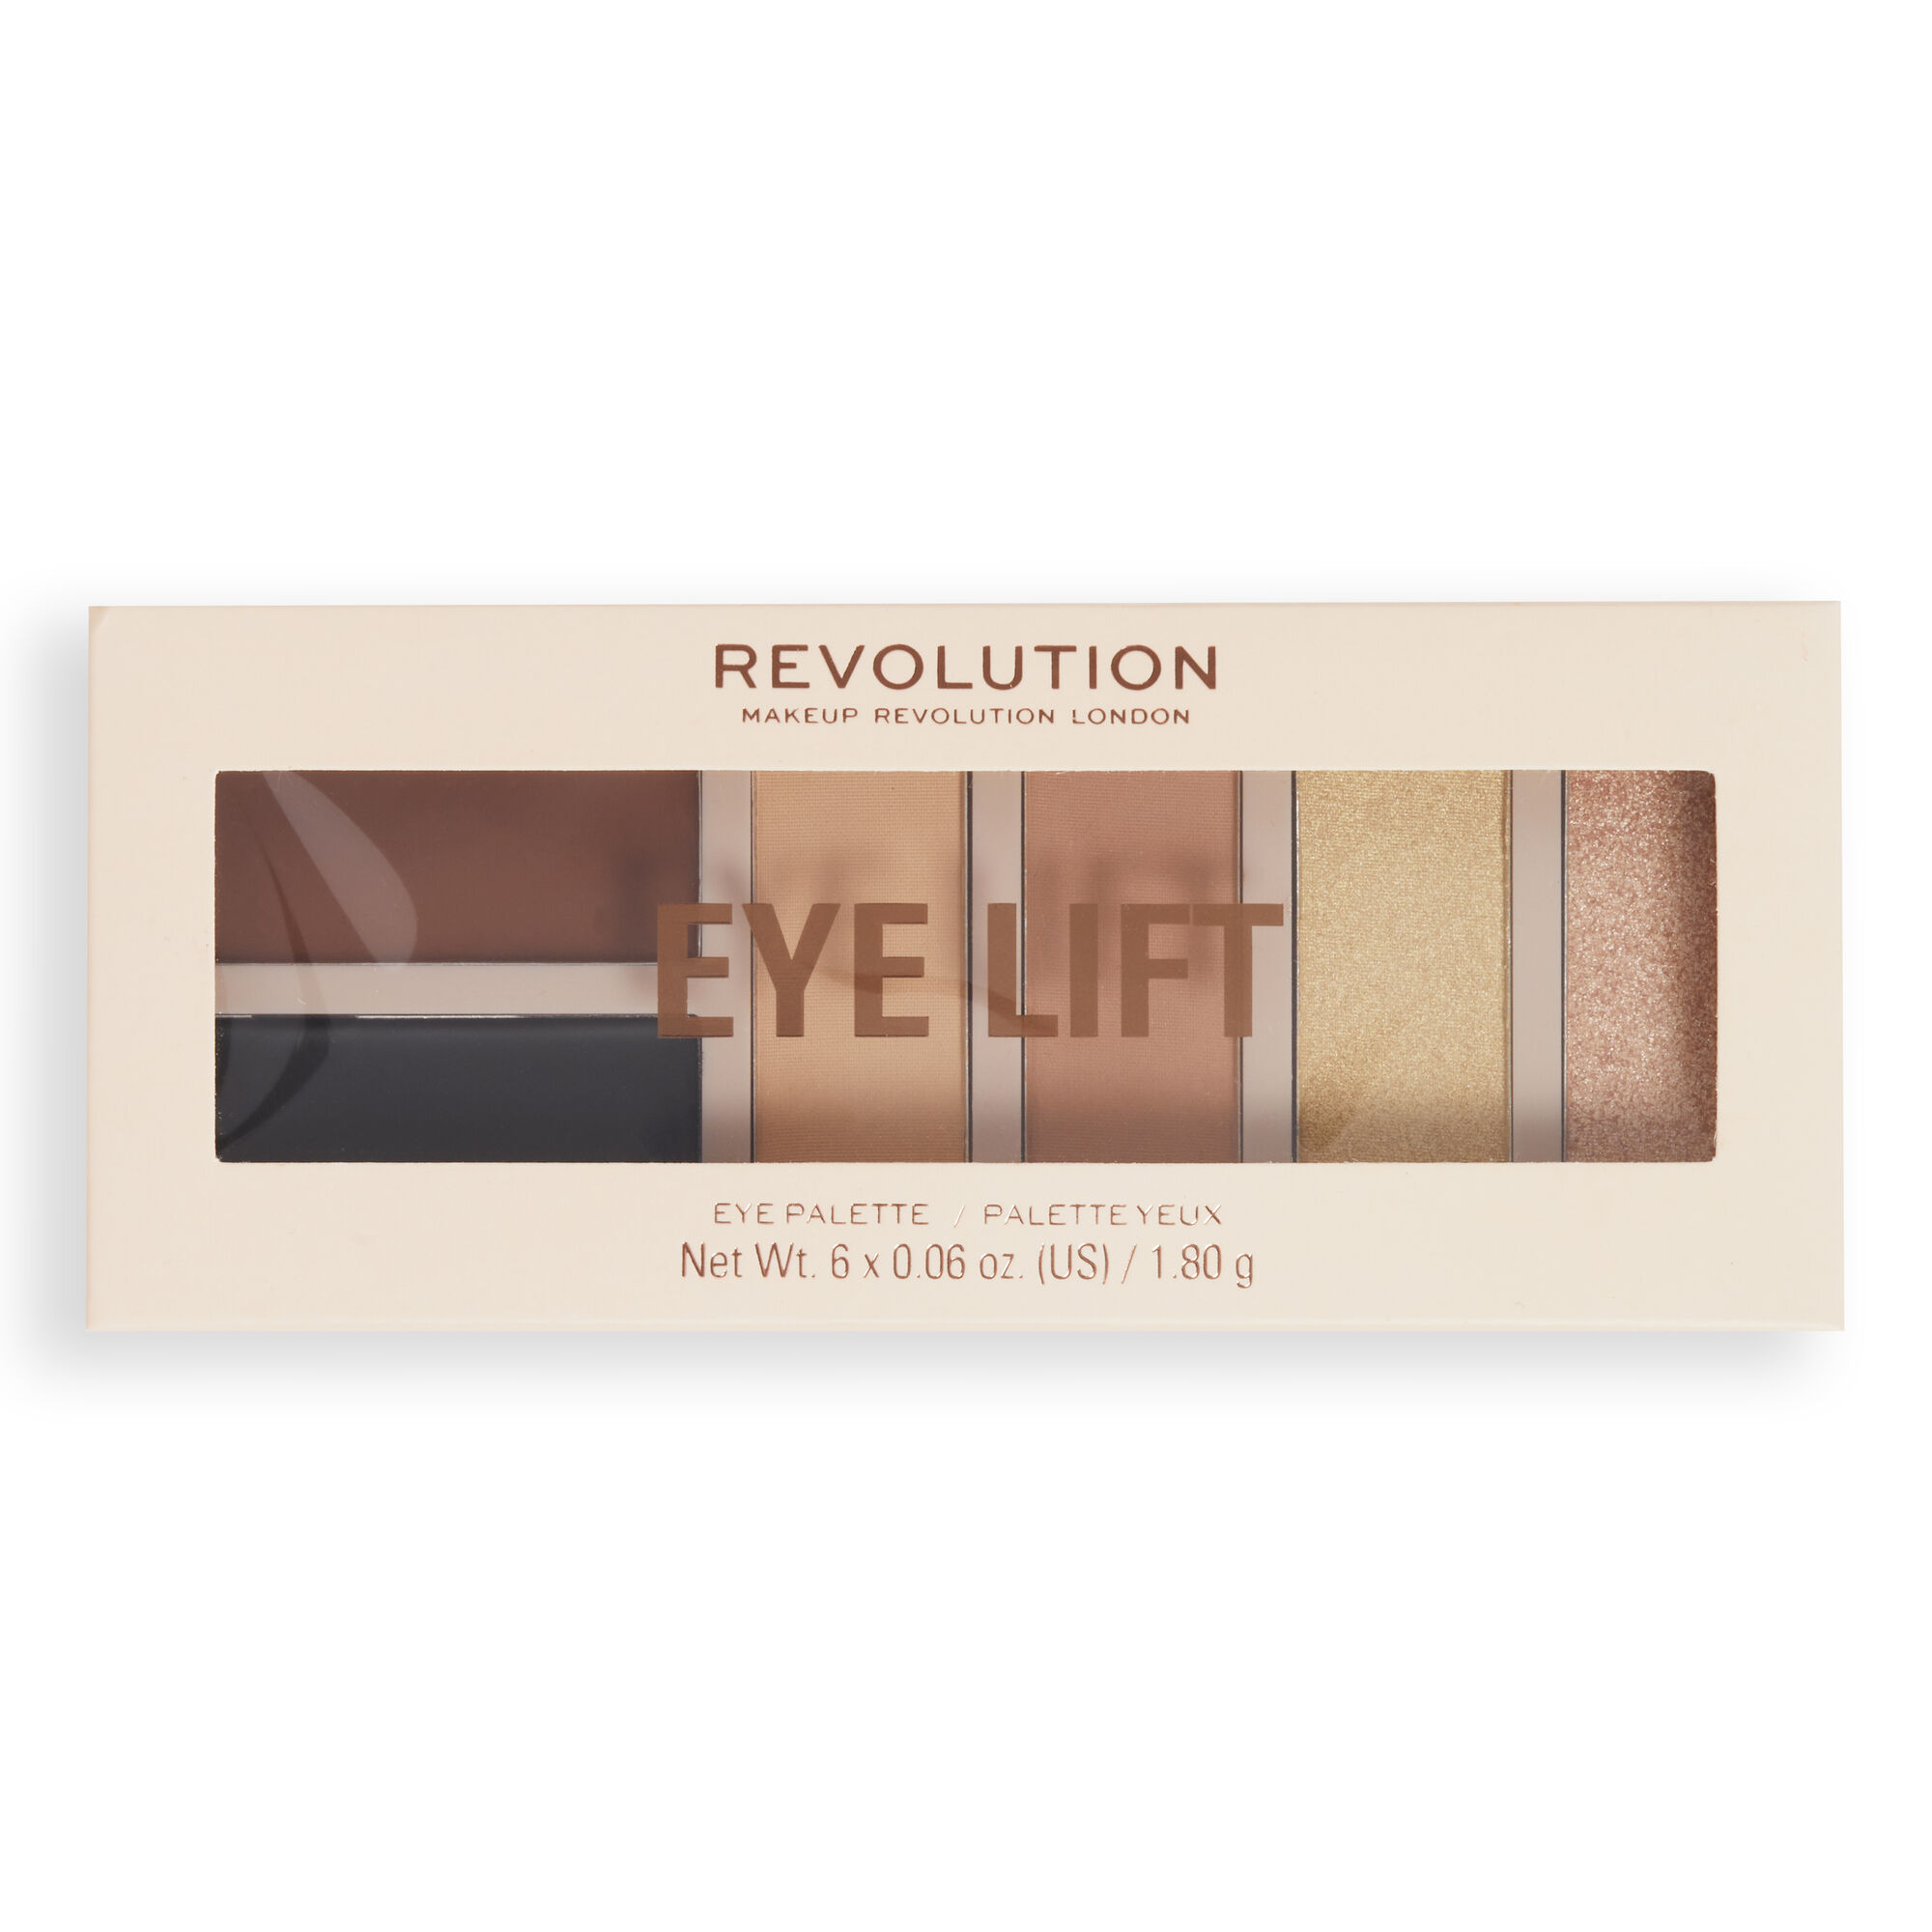 Палетка Revolution Makeup для макияжа глаз: тени-бронзер подводка тени Eye Lift Palette